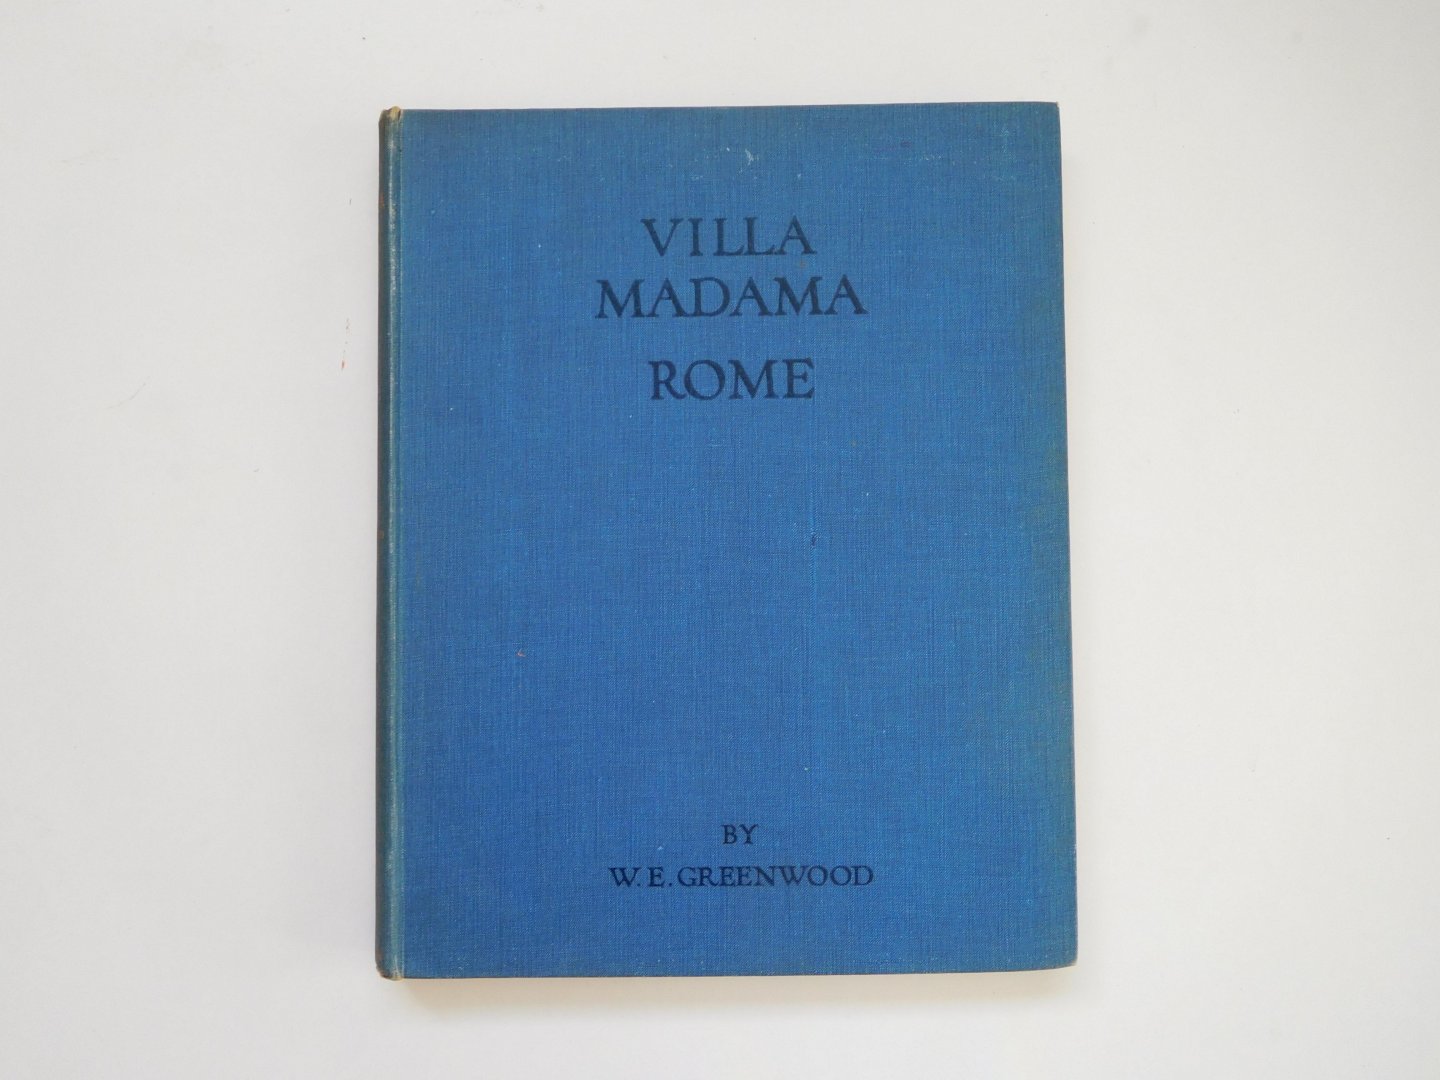 Greenwood, W.E. - The Villa Madama Rome, a reconstruction